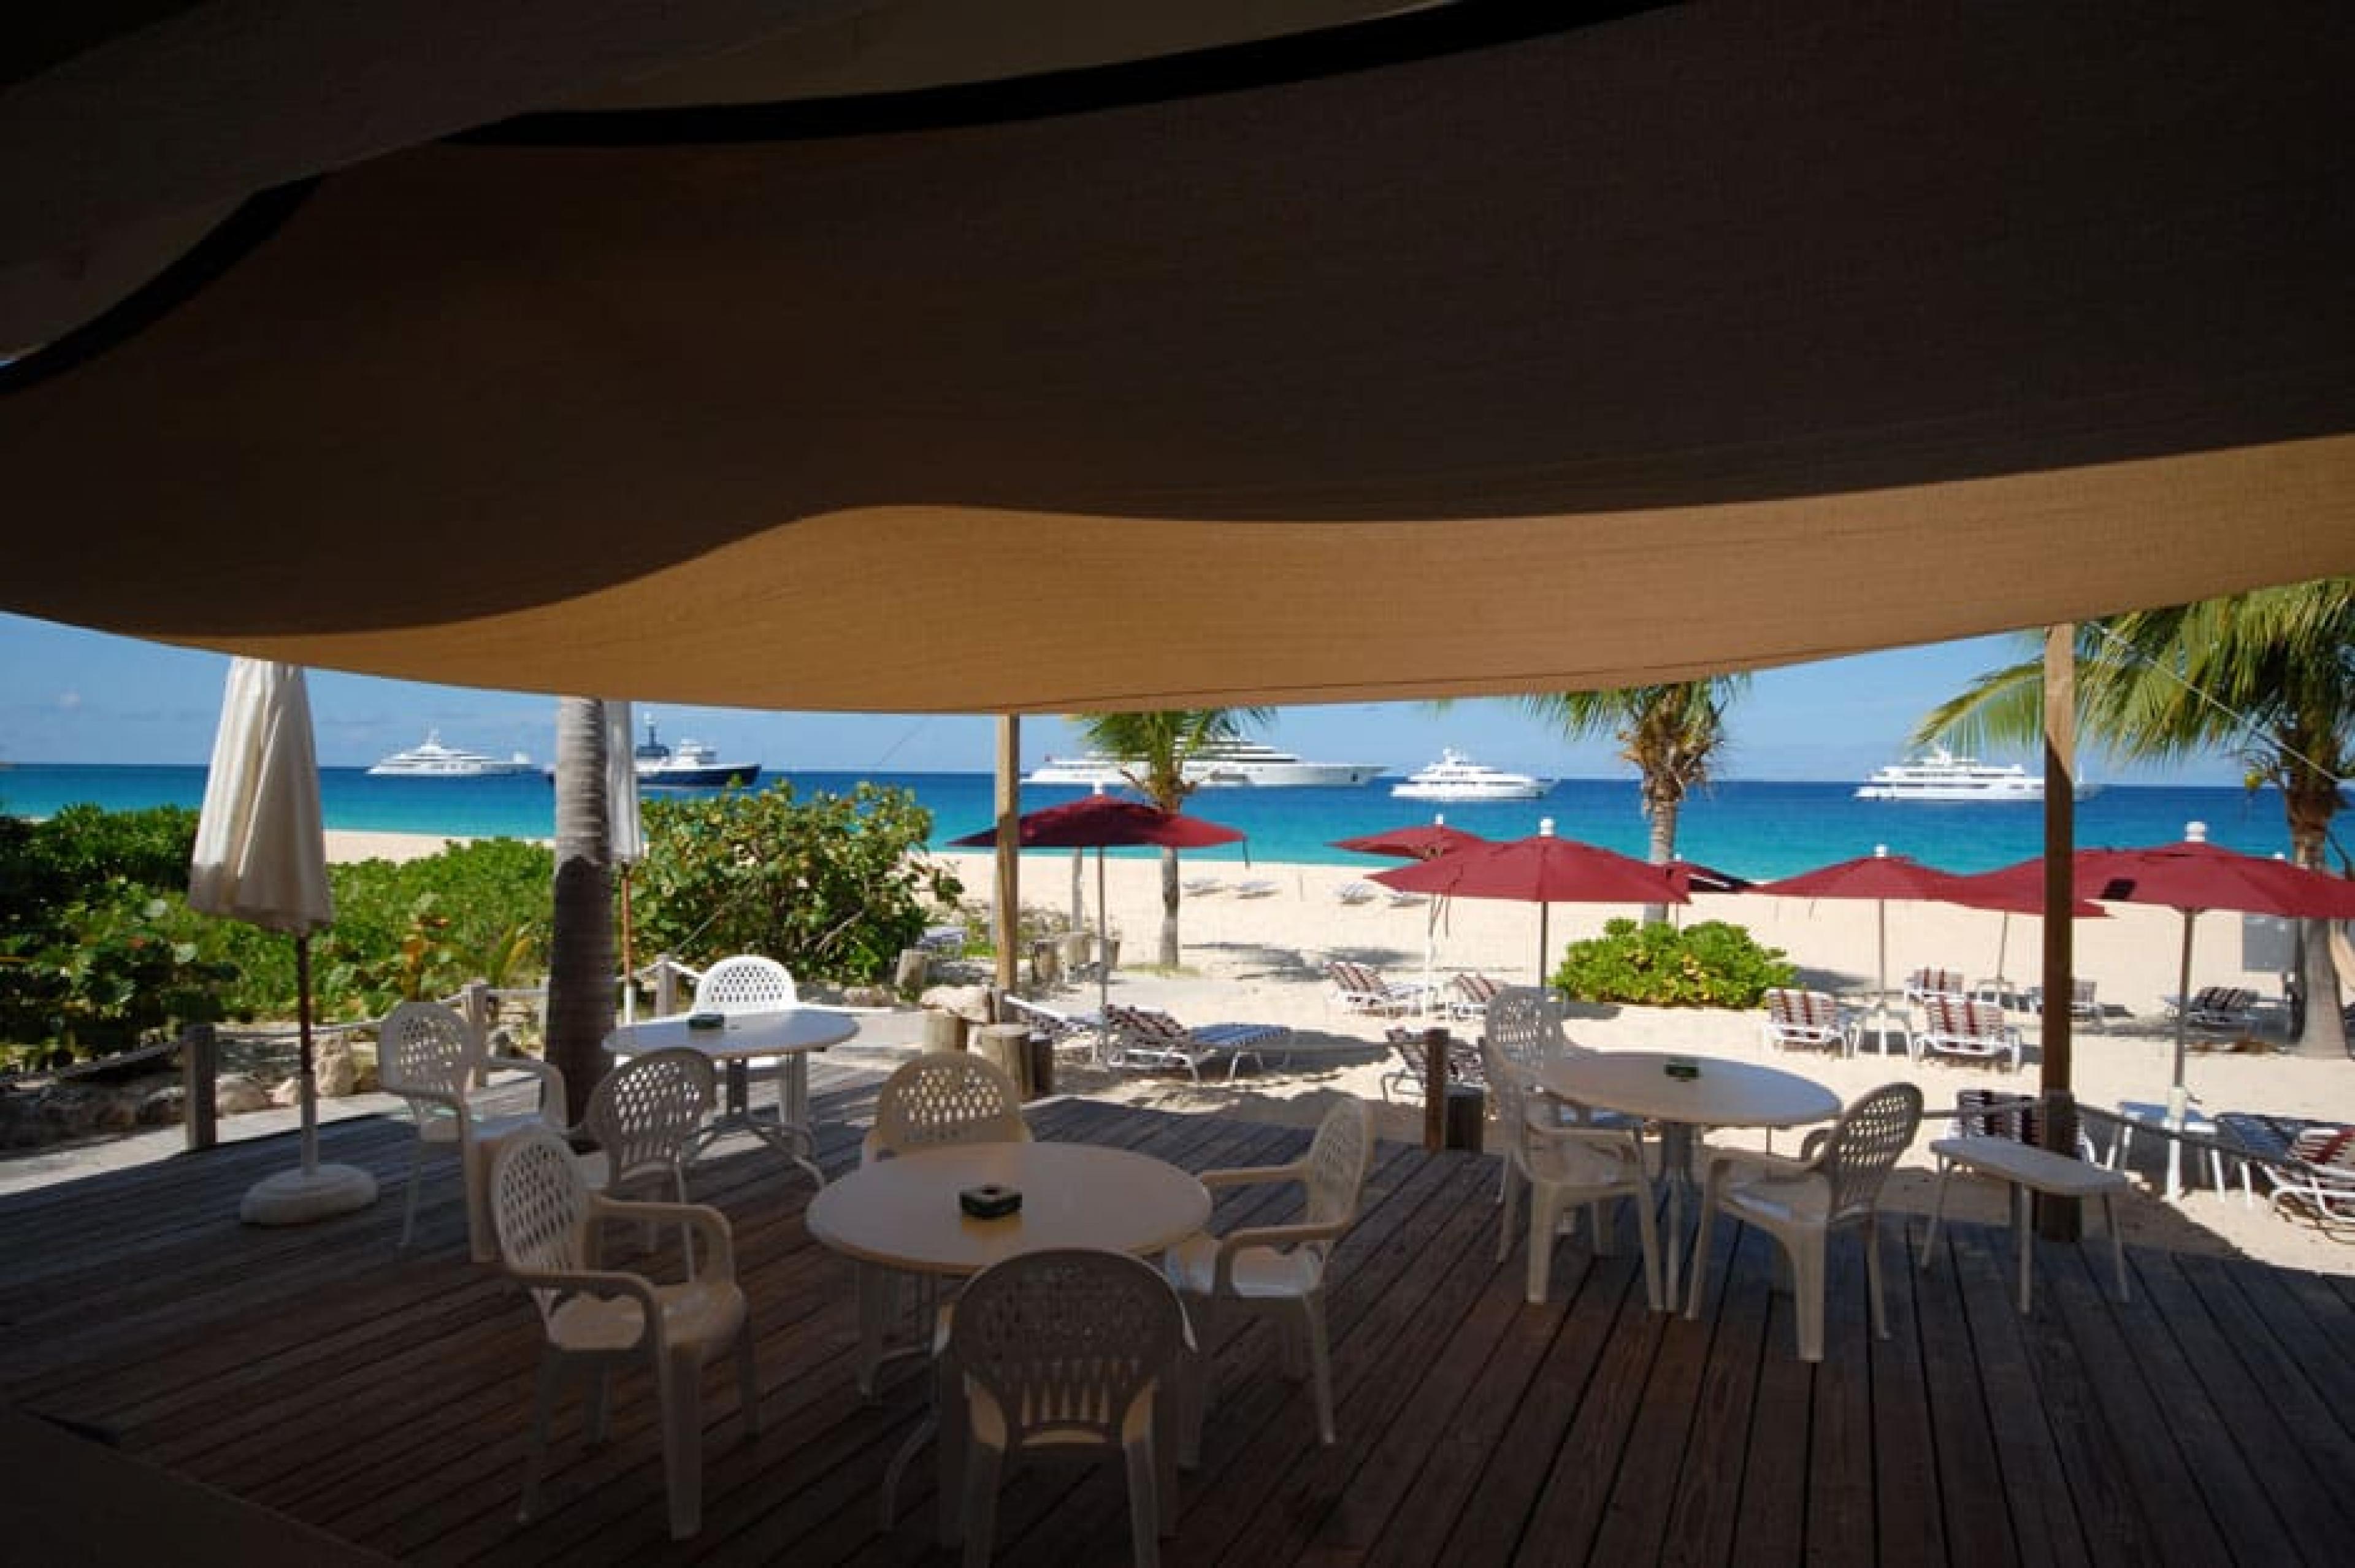 Dinning Area at Jacala, Anguilla, Caribbean